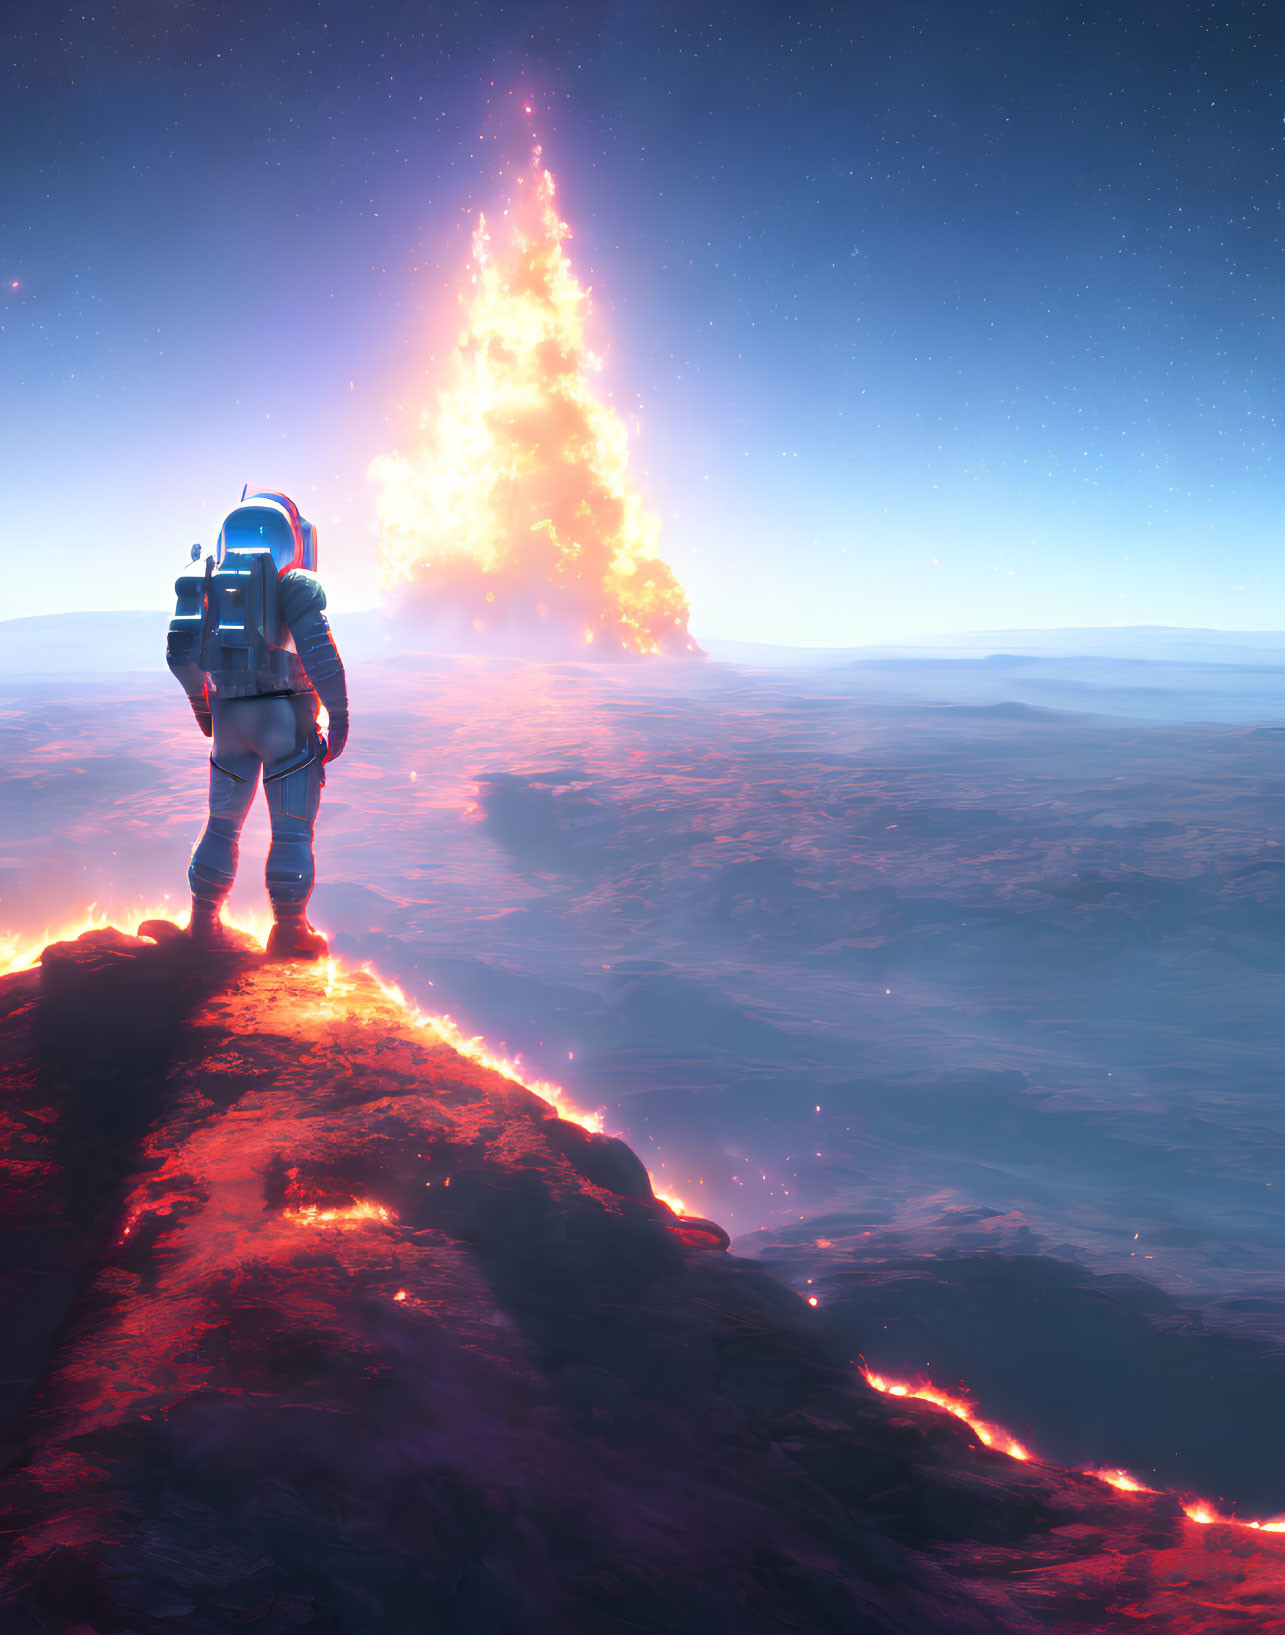 Astronaut observing alien landscape with glowing lava streams